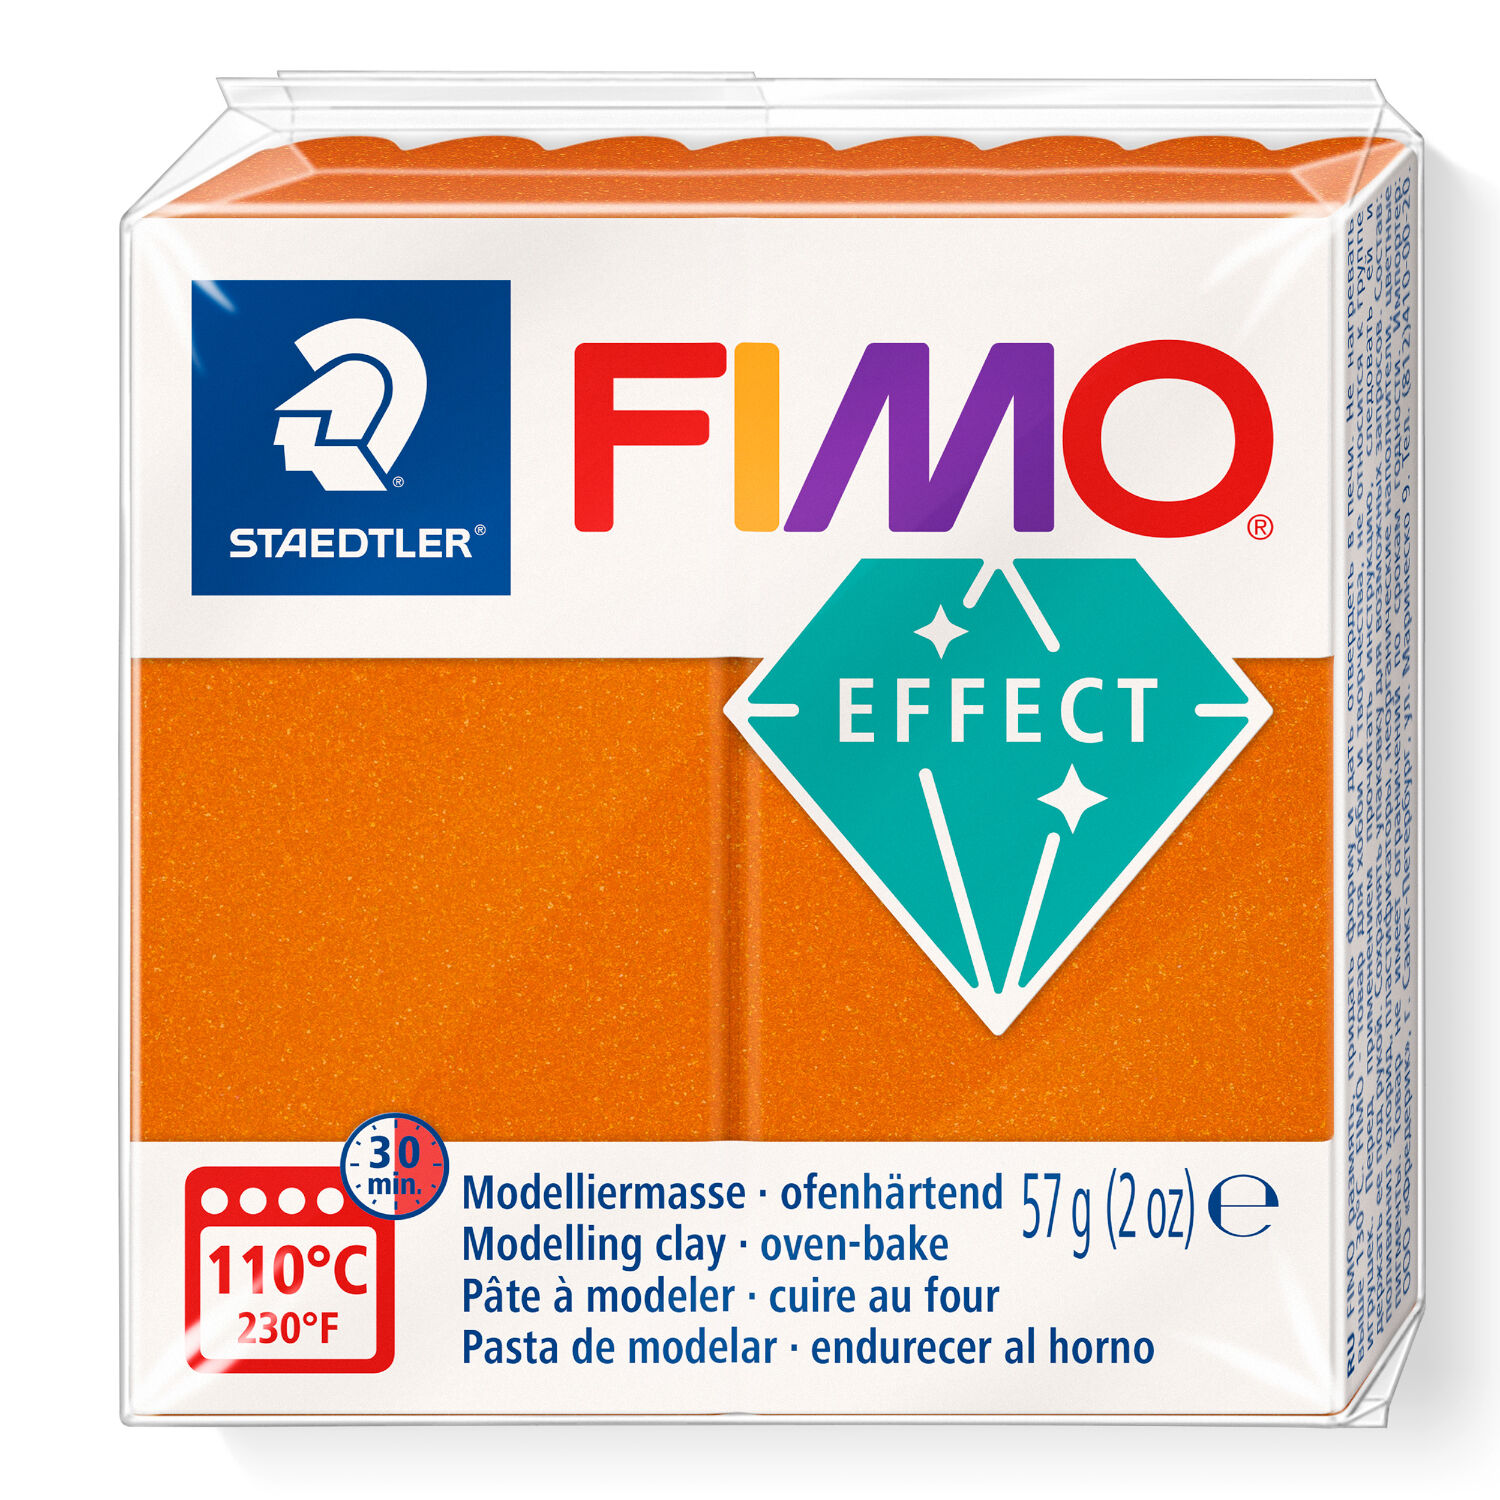 NEU Fimo Effect 57g, Metallic Orange